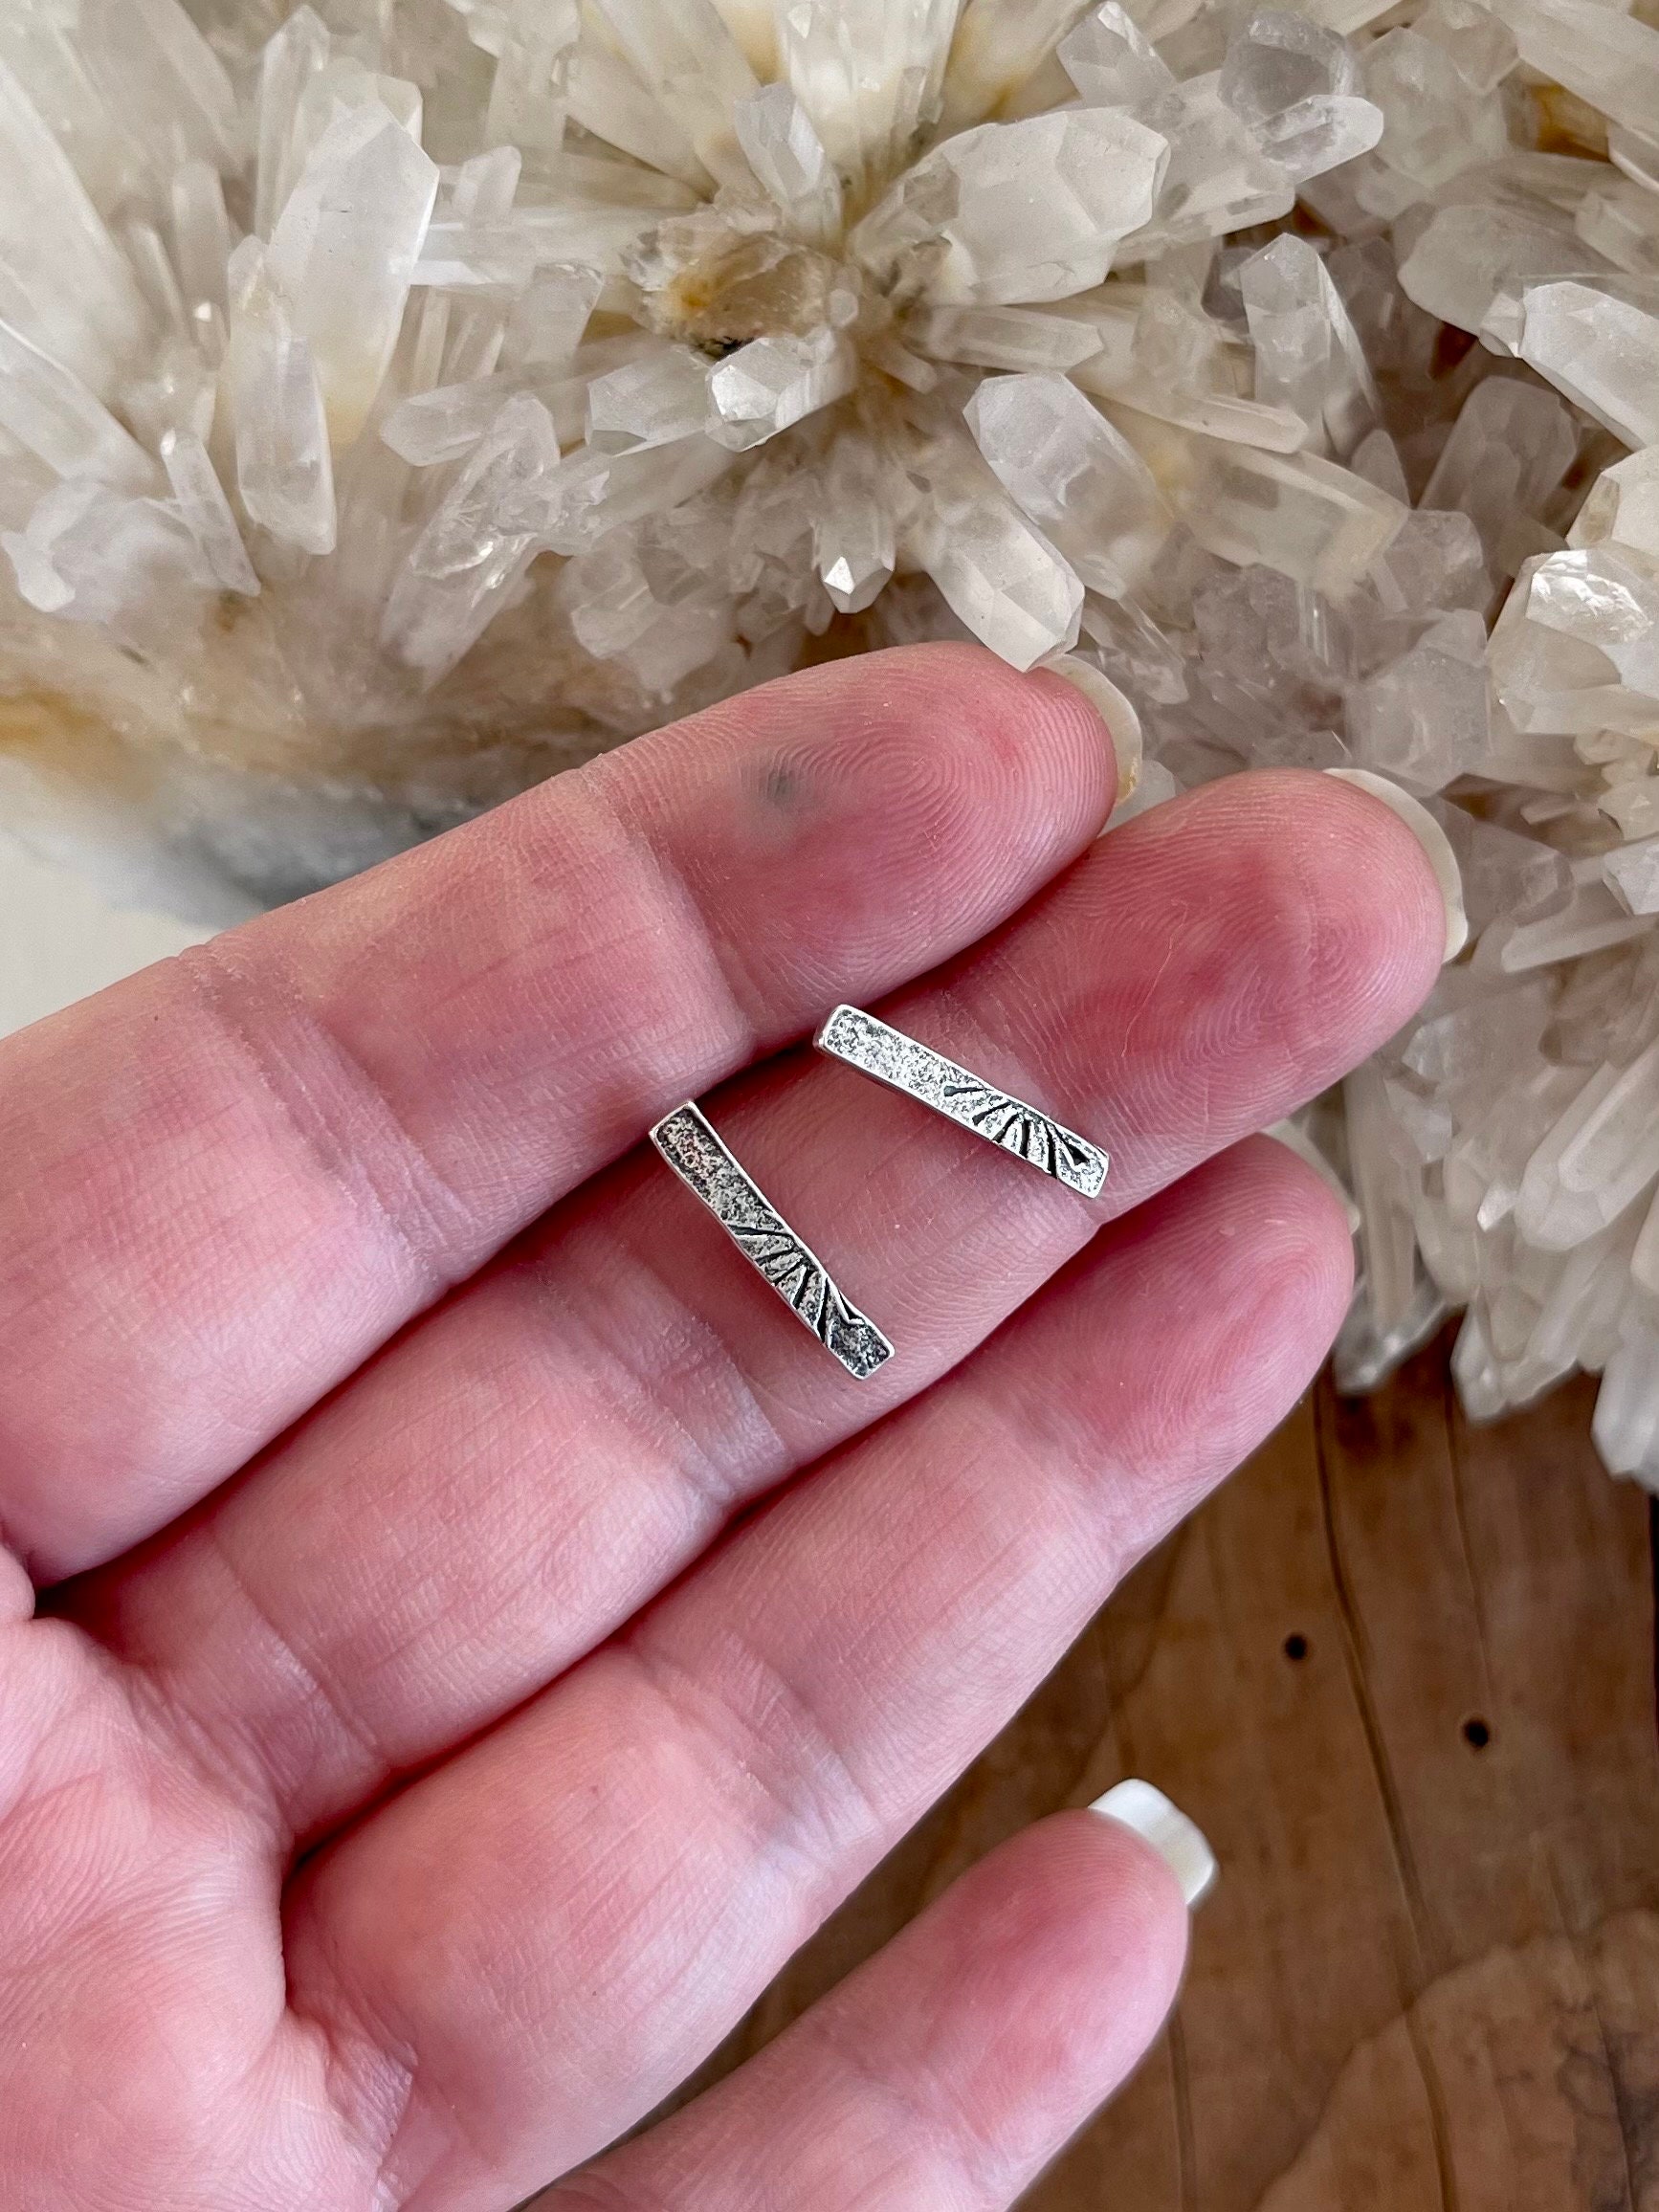 Bar Earrings – Silver Stamped Jewelry